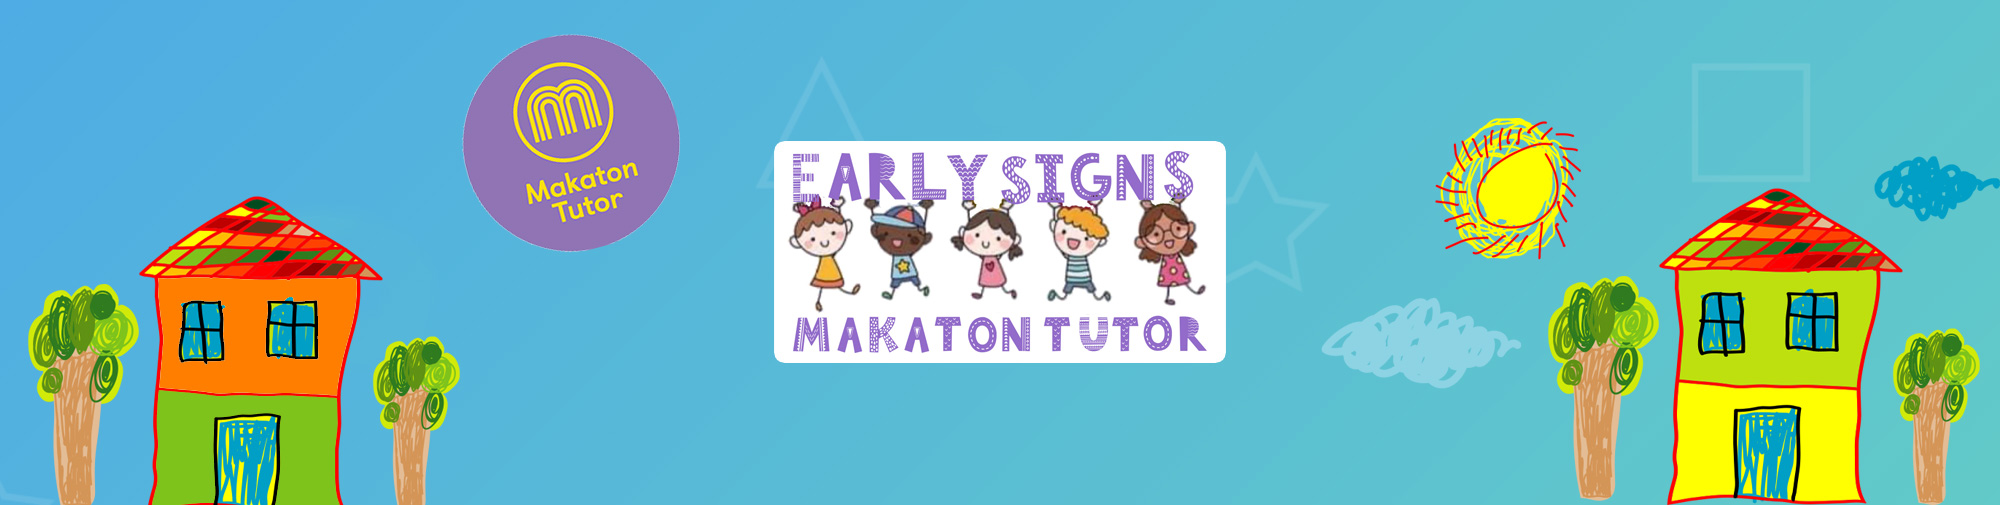 Early Signs Makaton Tutor website banner